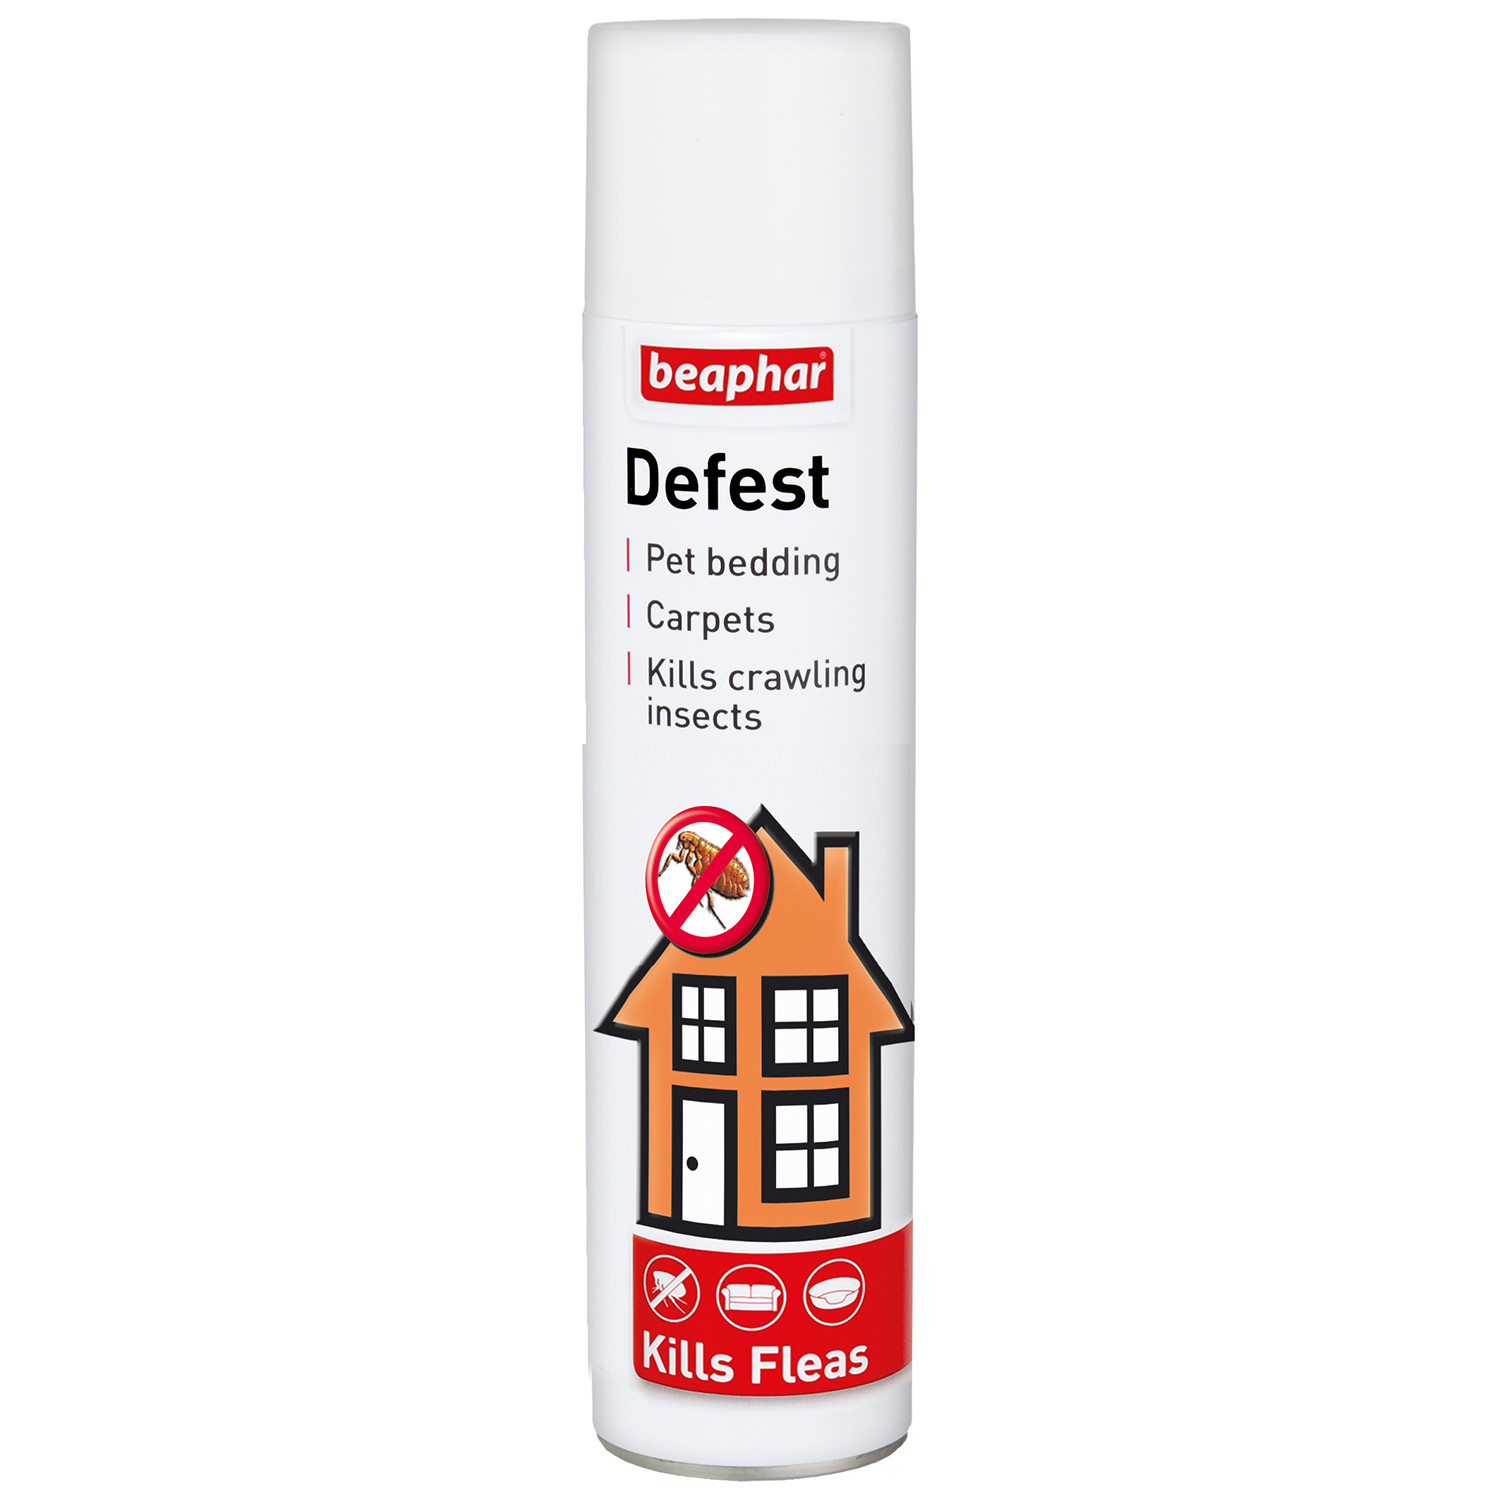 Beaphar Defest Flea Control Spray 400ml Image